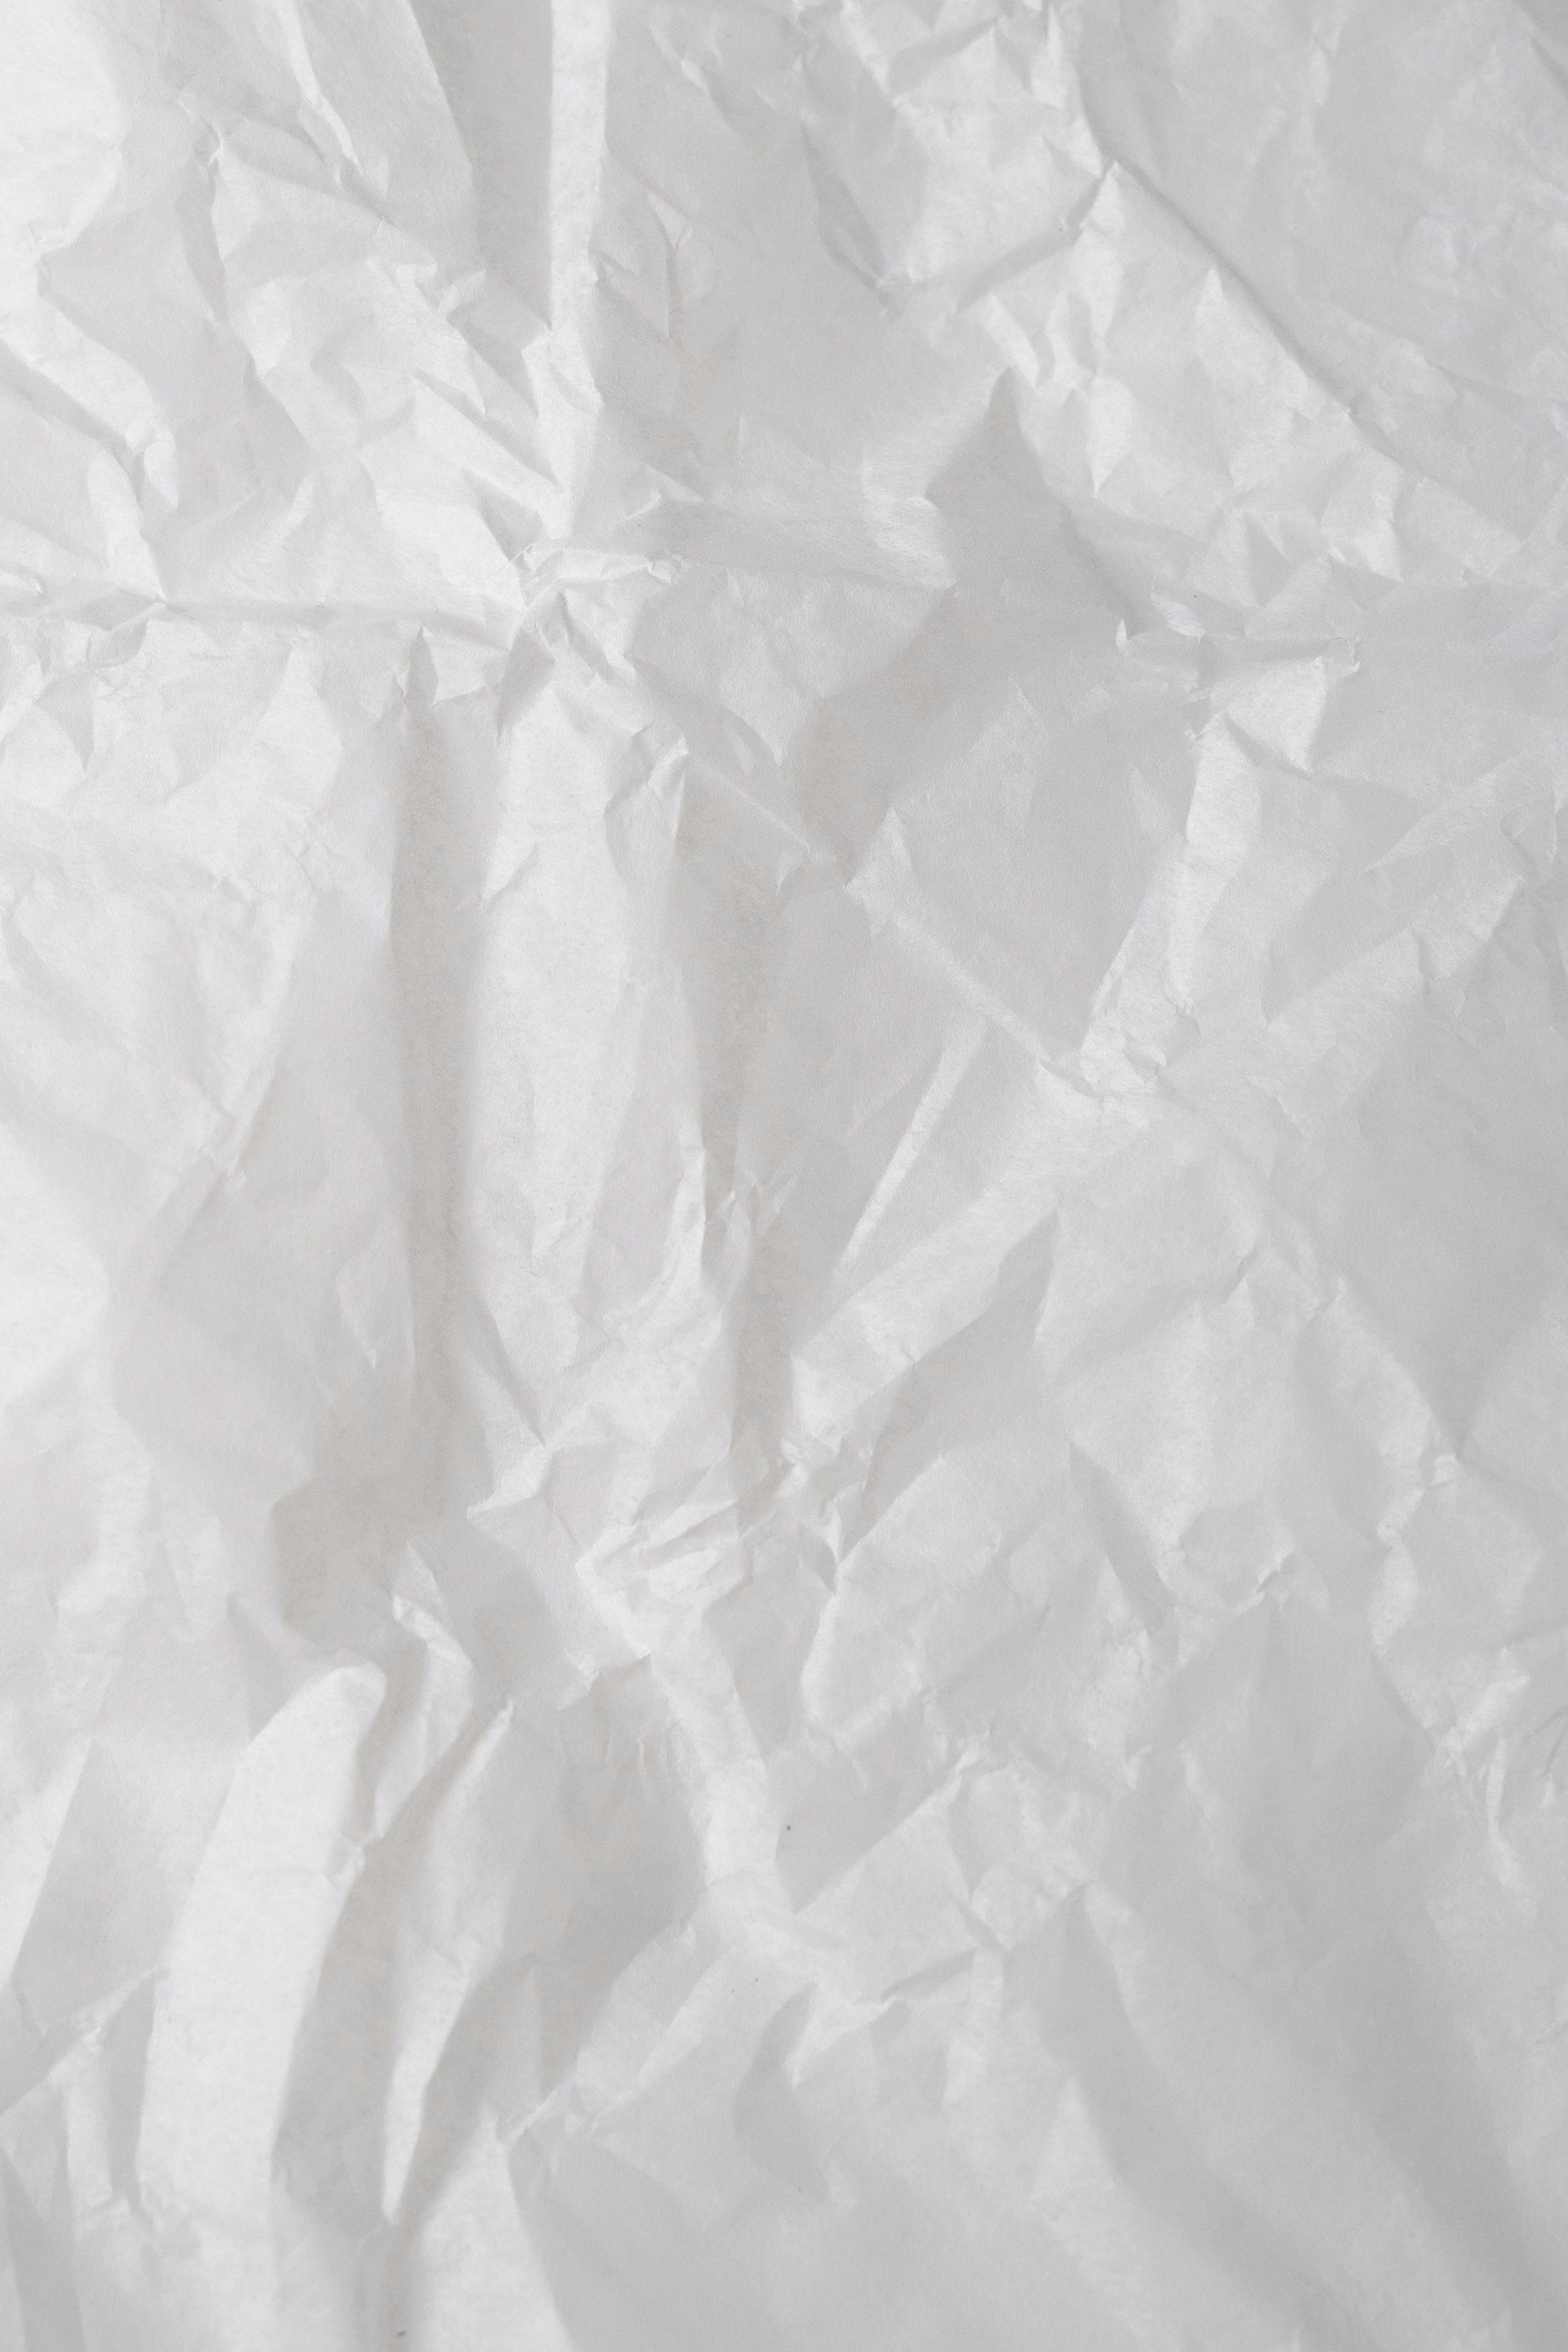 White Construction Paper Texture Picture